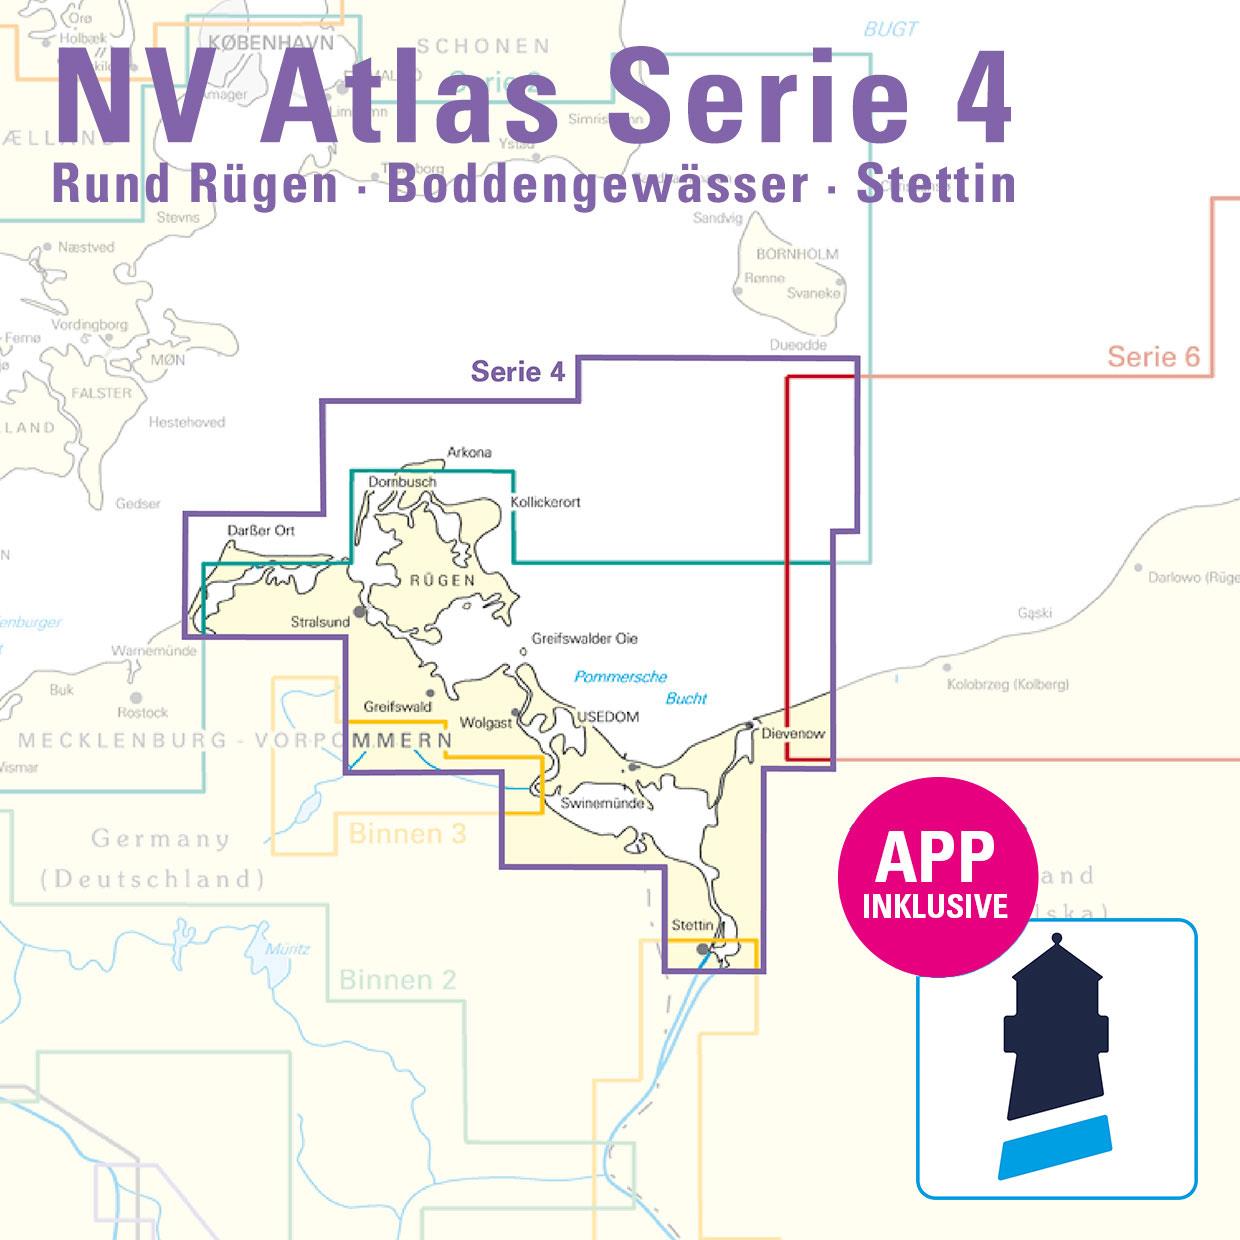 NV Charts Baltic Region 4, East Germany - Rügen to Szczecin